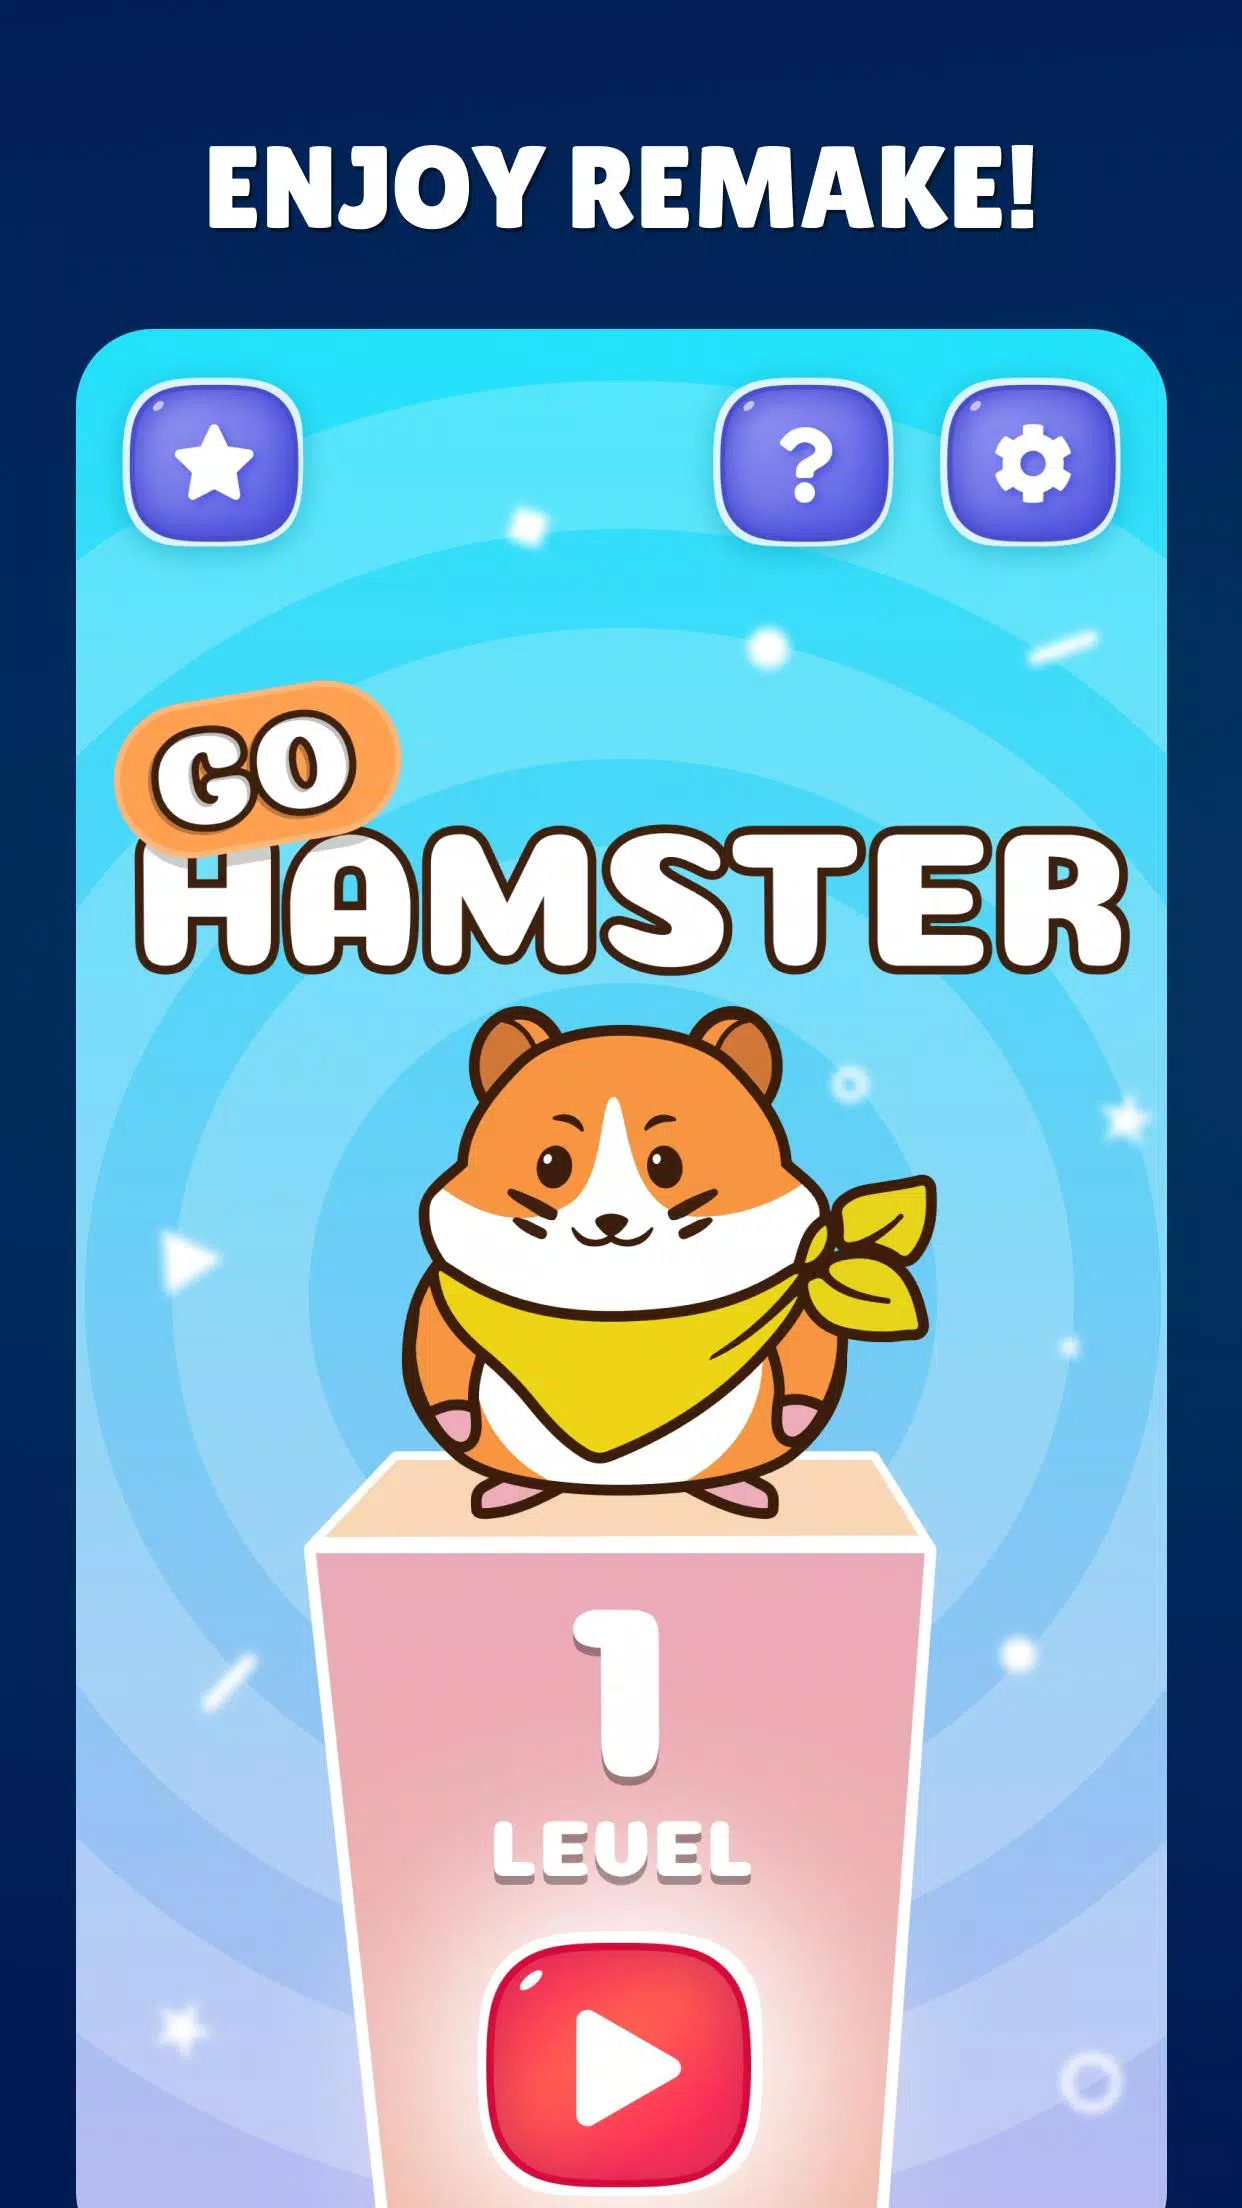 Hamster Grid Odd Even Jogue Agora Online Gratuitamente Y8.com